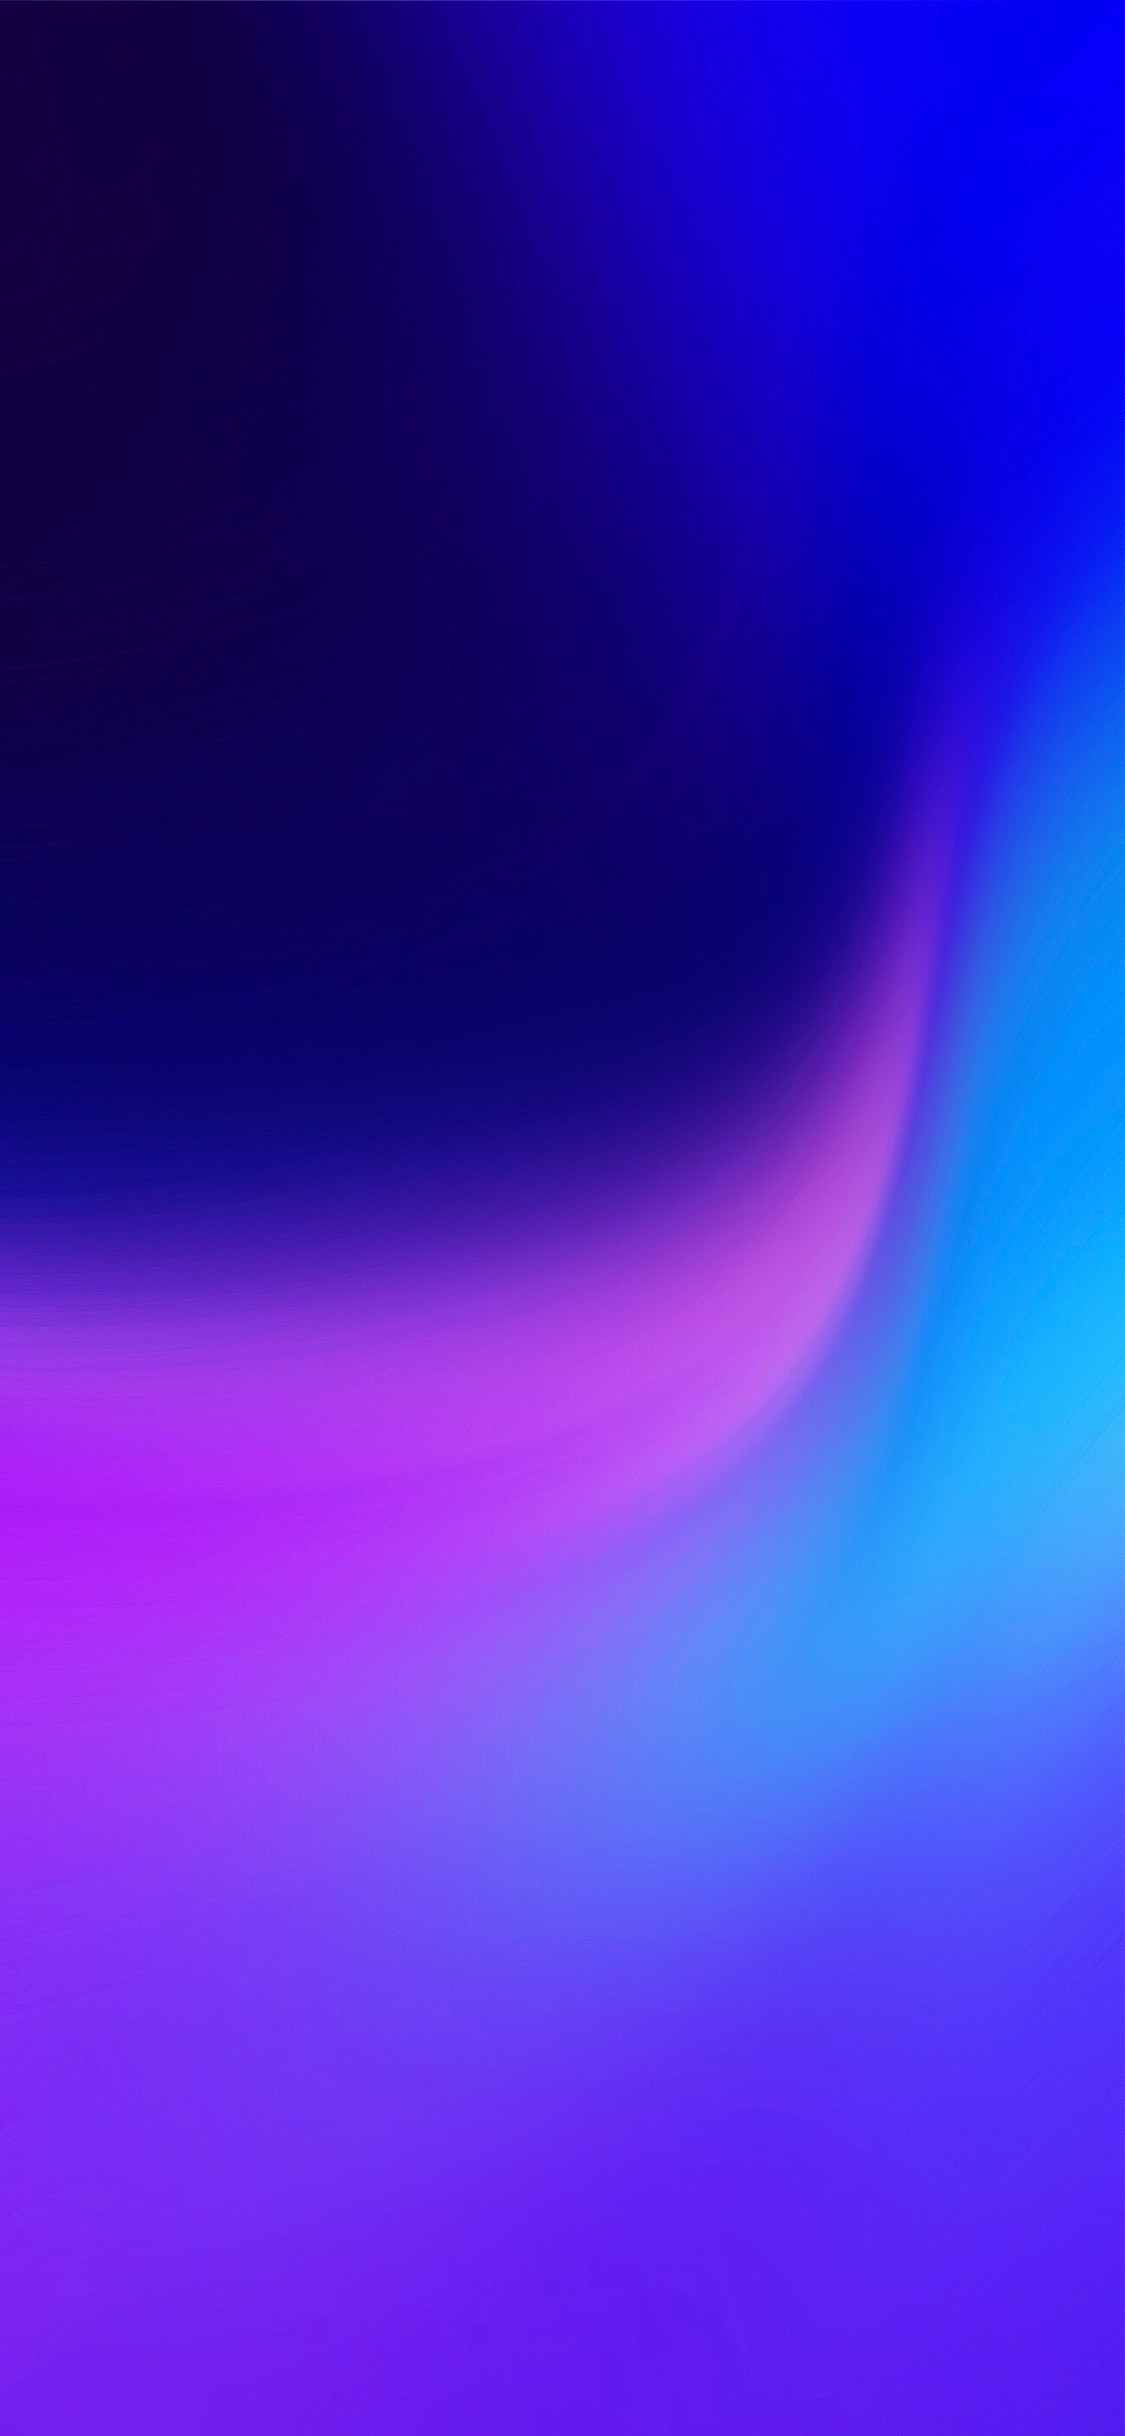 fondo de pantalla de inicio,azul,violeta,púrpura,azul eléctrico,ligero